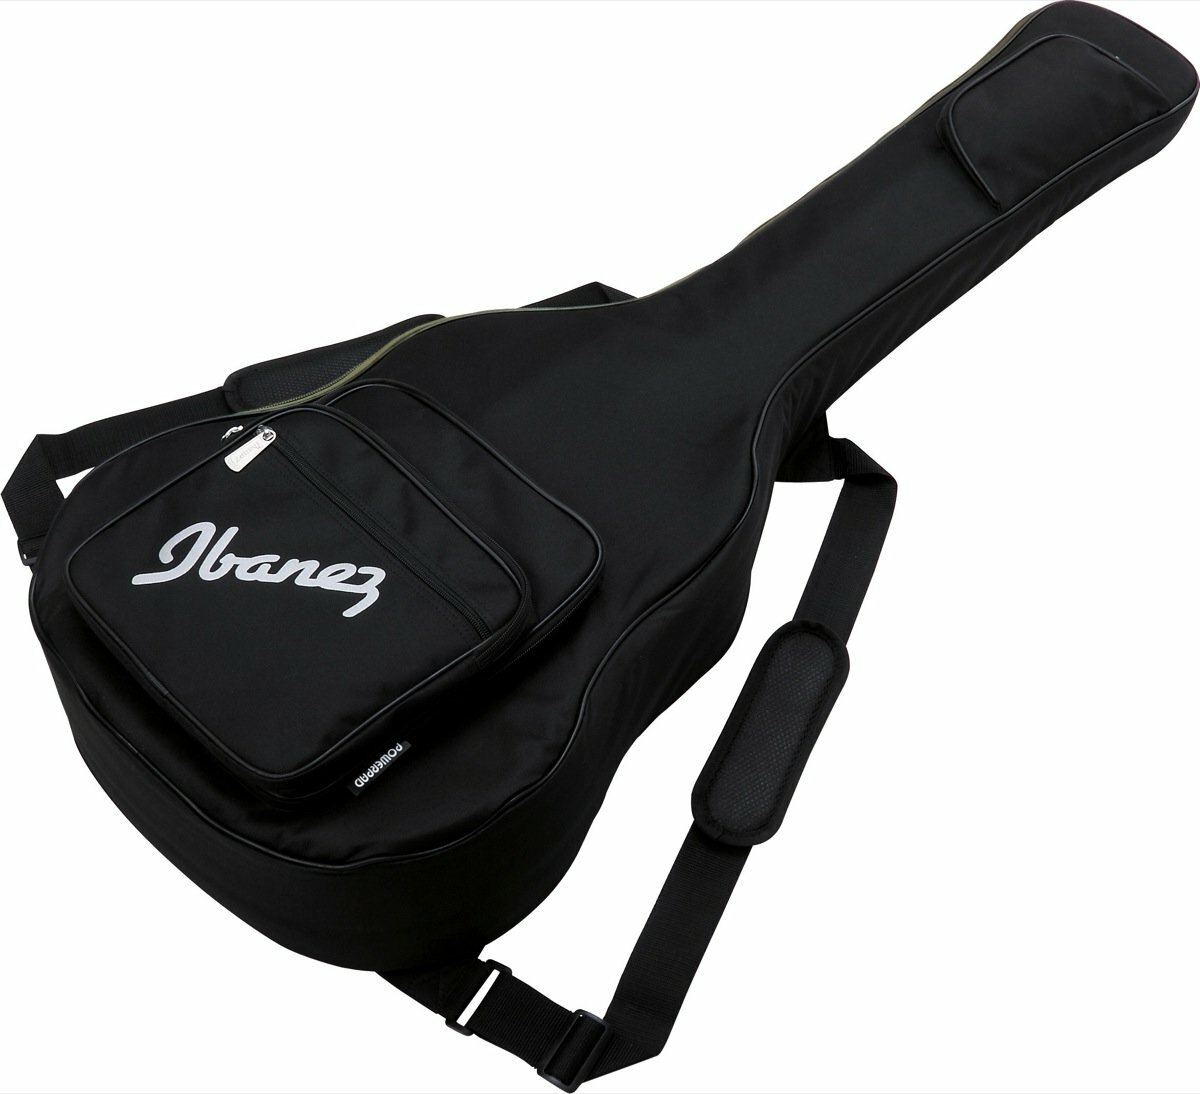 Ibanez Iabb510 Bk Powerpad Acoustic Bass Gig Bag - Elektrische bashoes - Main picture